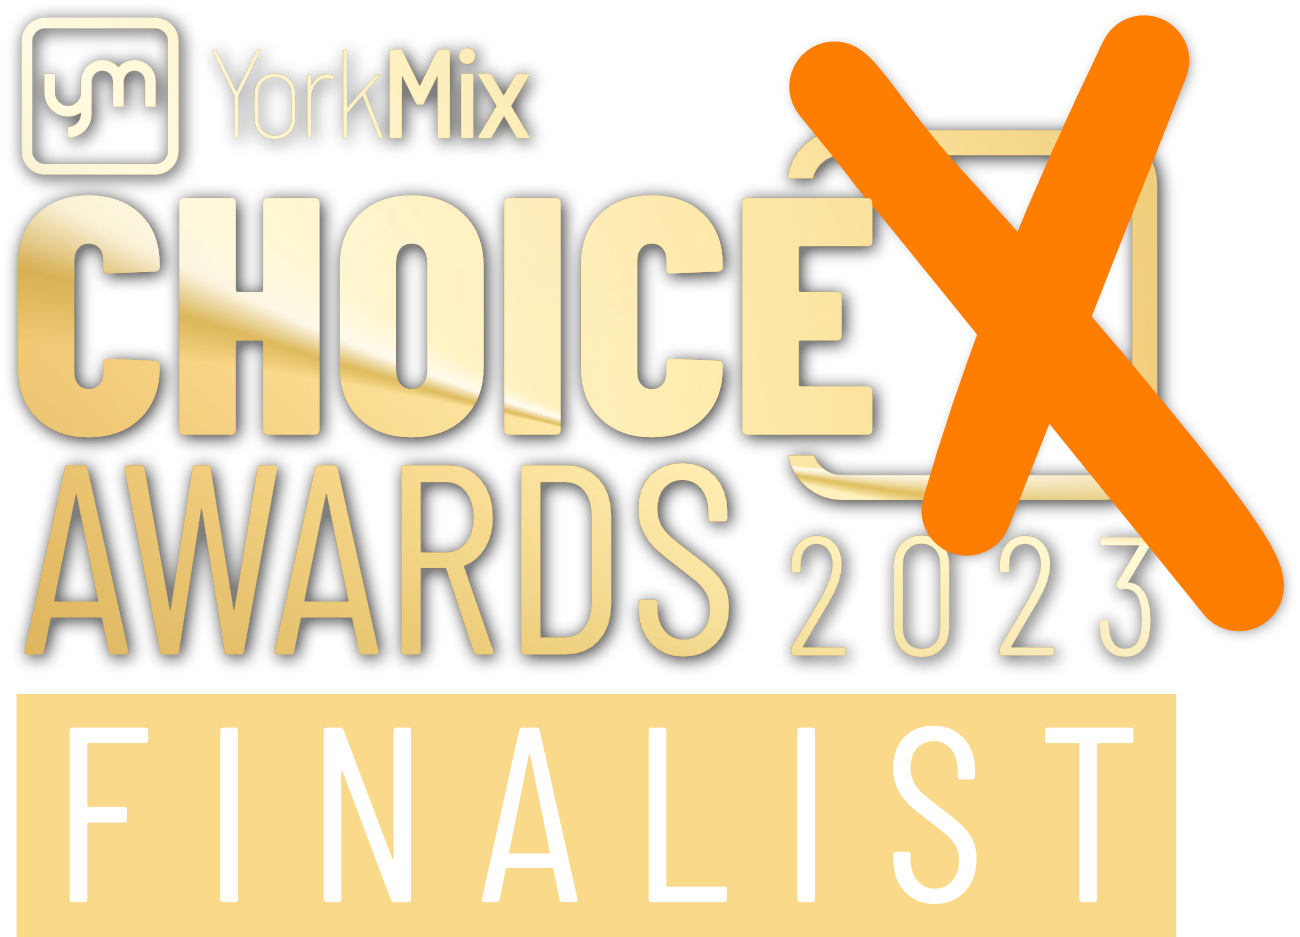 We're a YorkMix Choice Awards 2023 Finalist